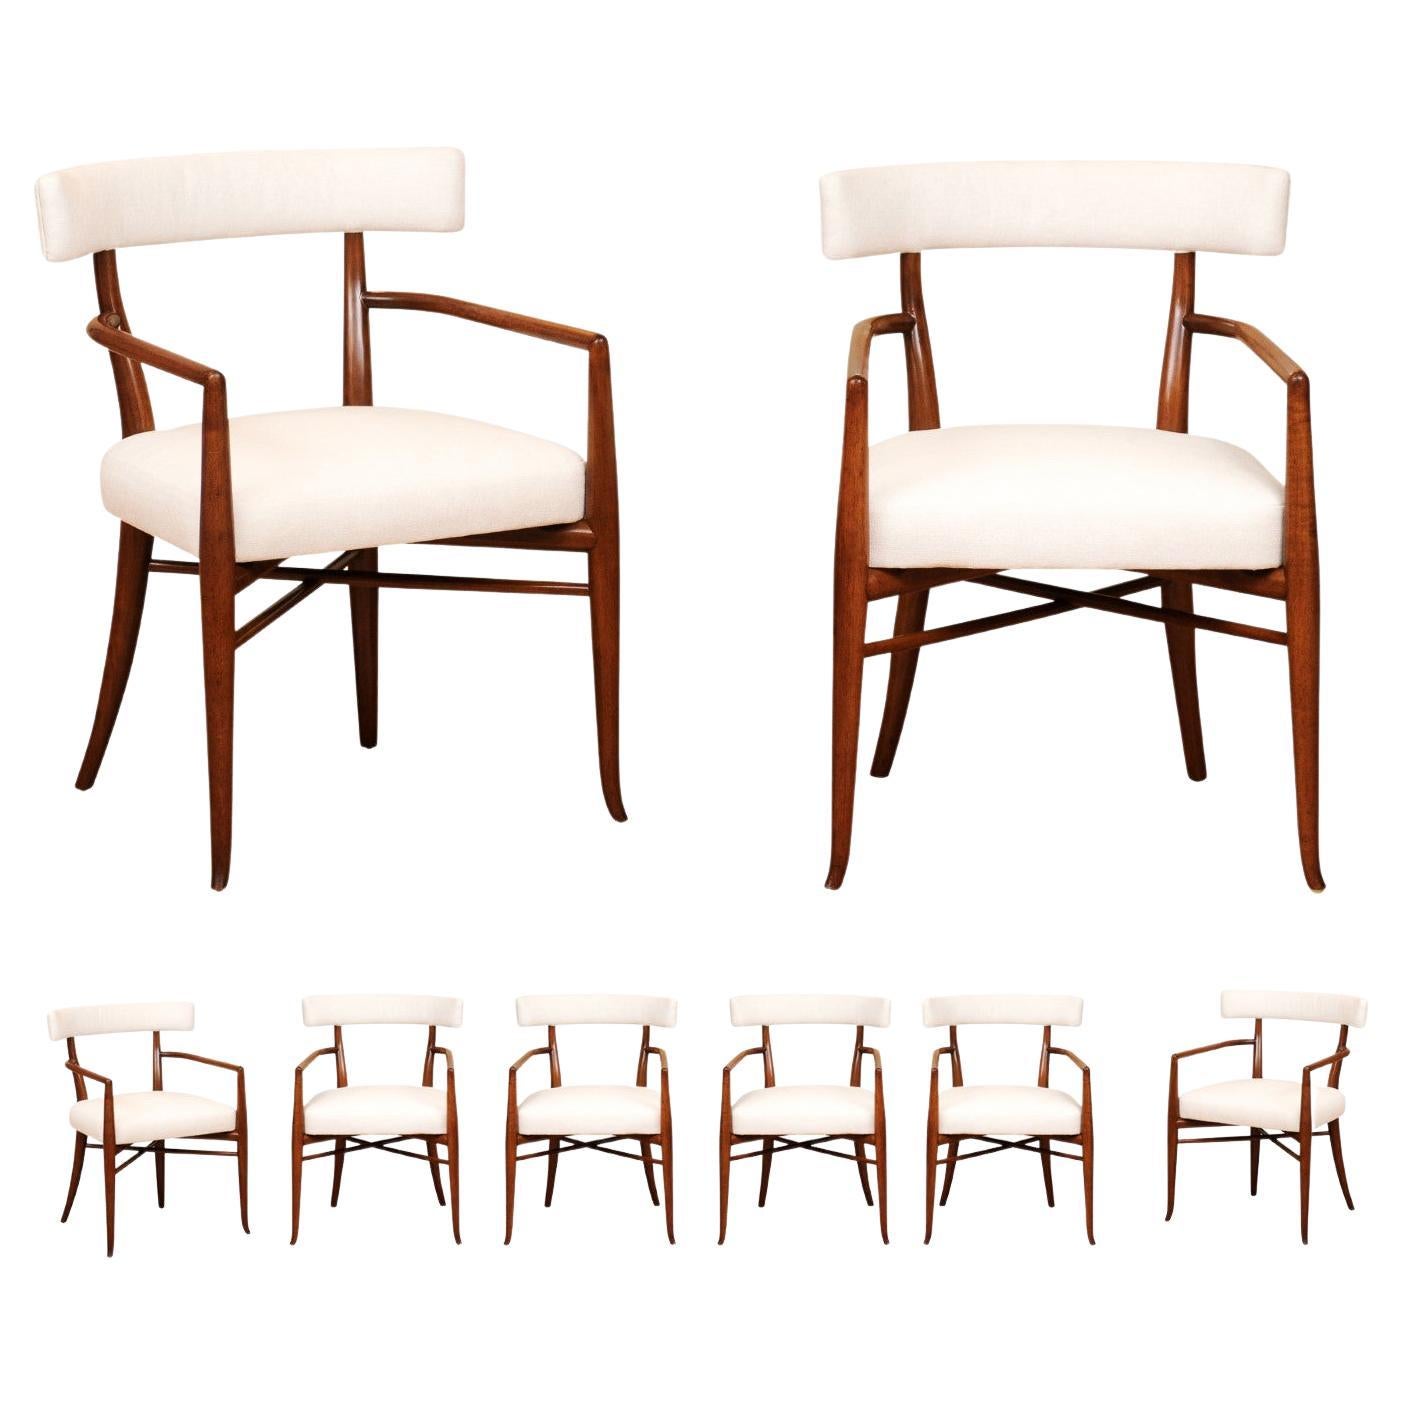 Extraordinaire ensemble de 8 chaises Klismos modernes par Robsjohn-Gibbings